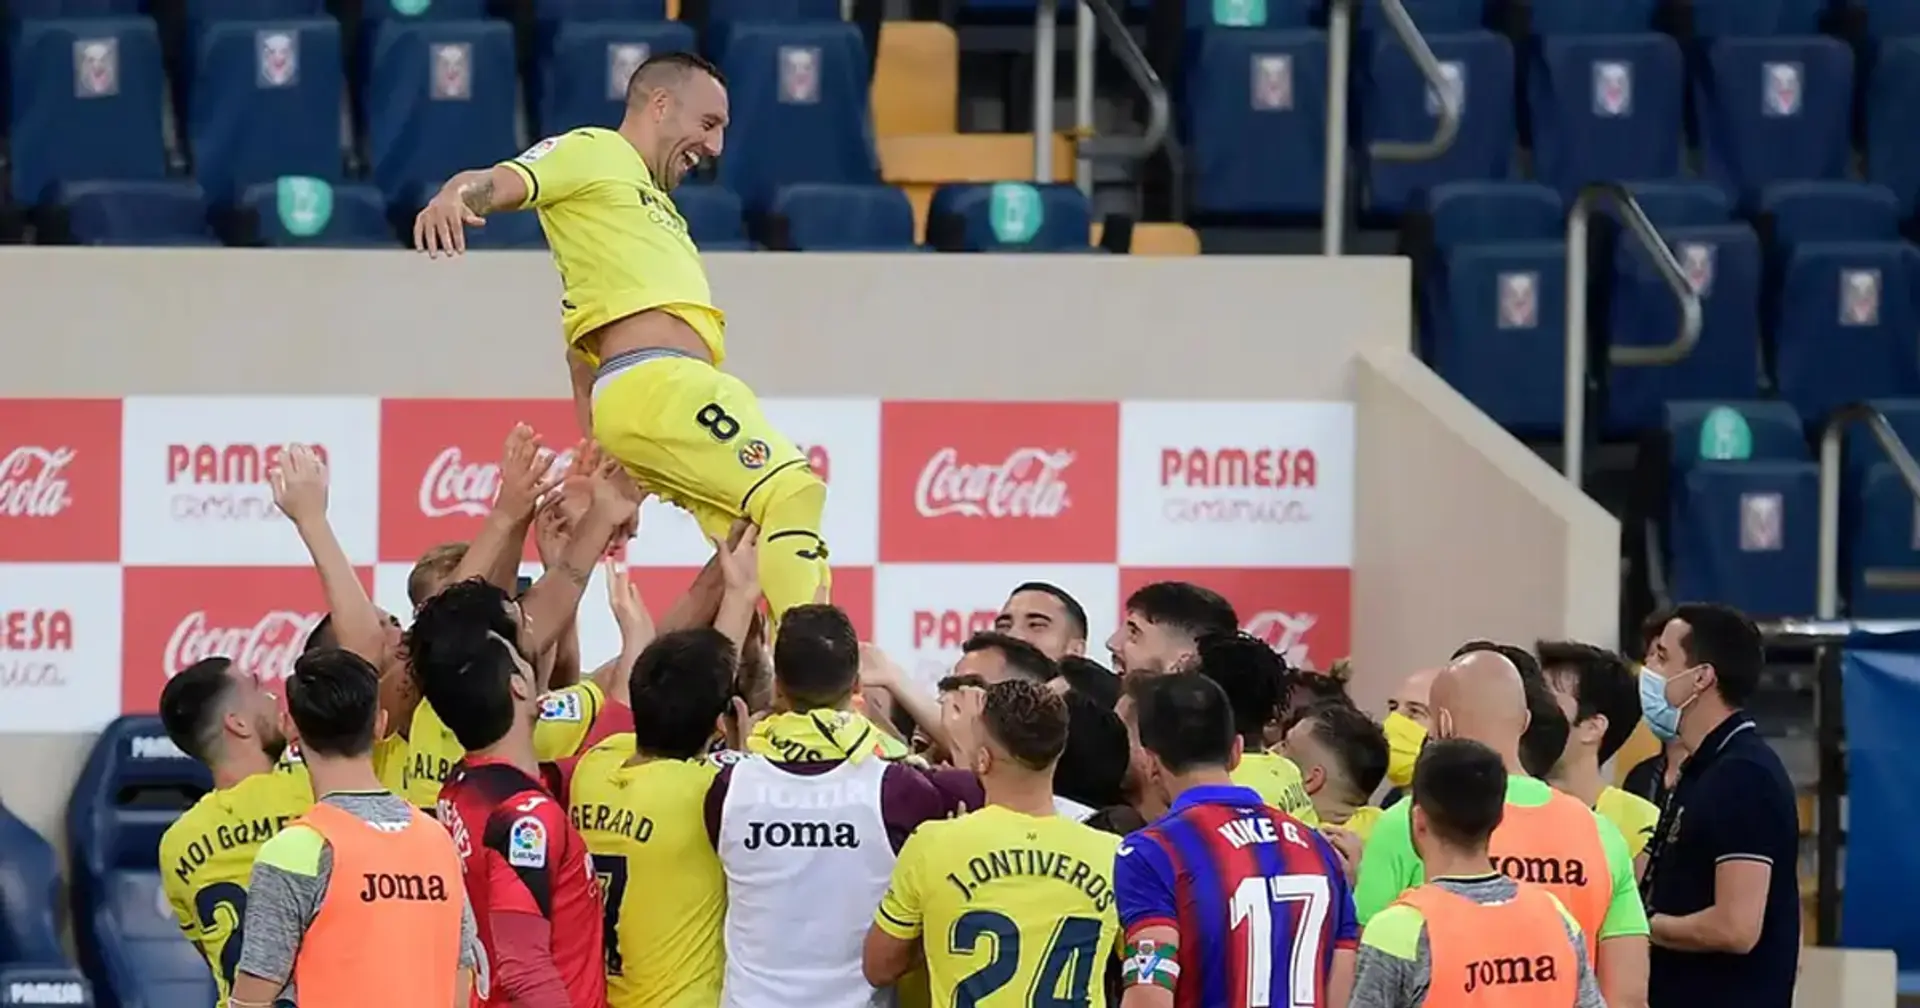 Santi Cazorla given hero's send-off at Villarreal as he played his last game at boyhood club